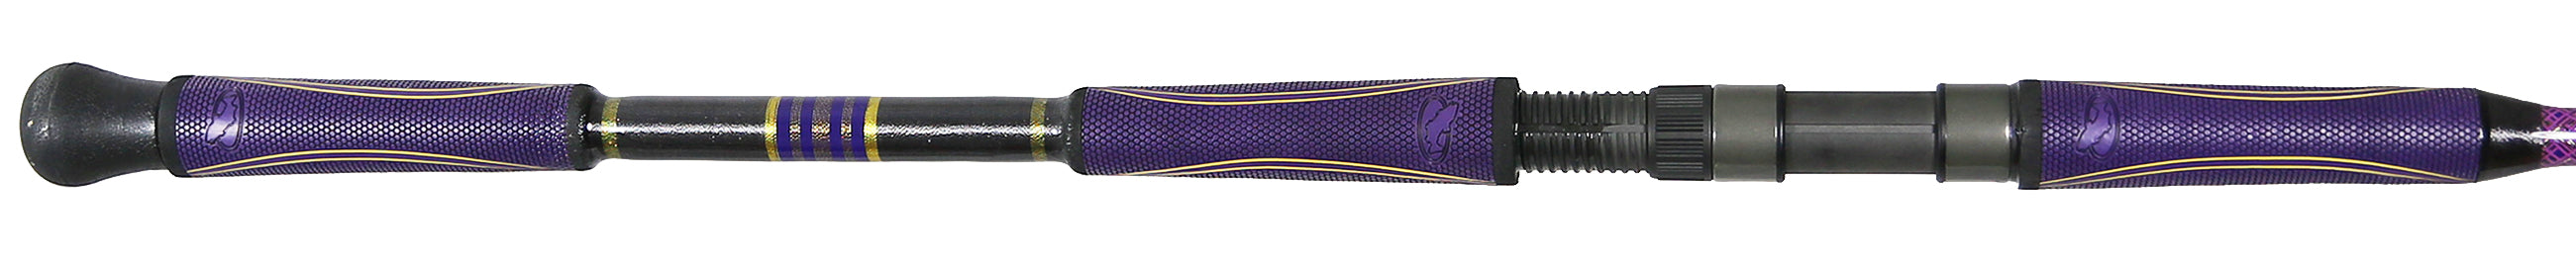 Jigging World MK2 7'6" Custom Spinning Rod - Purple